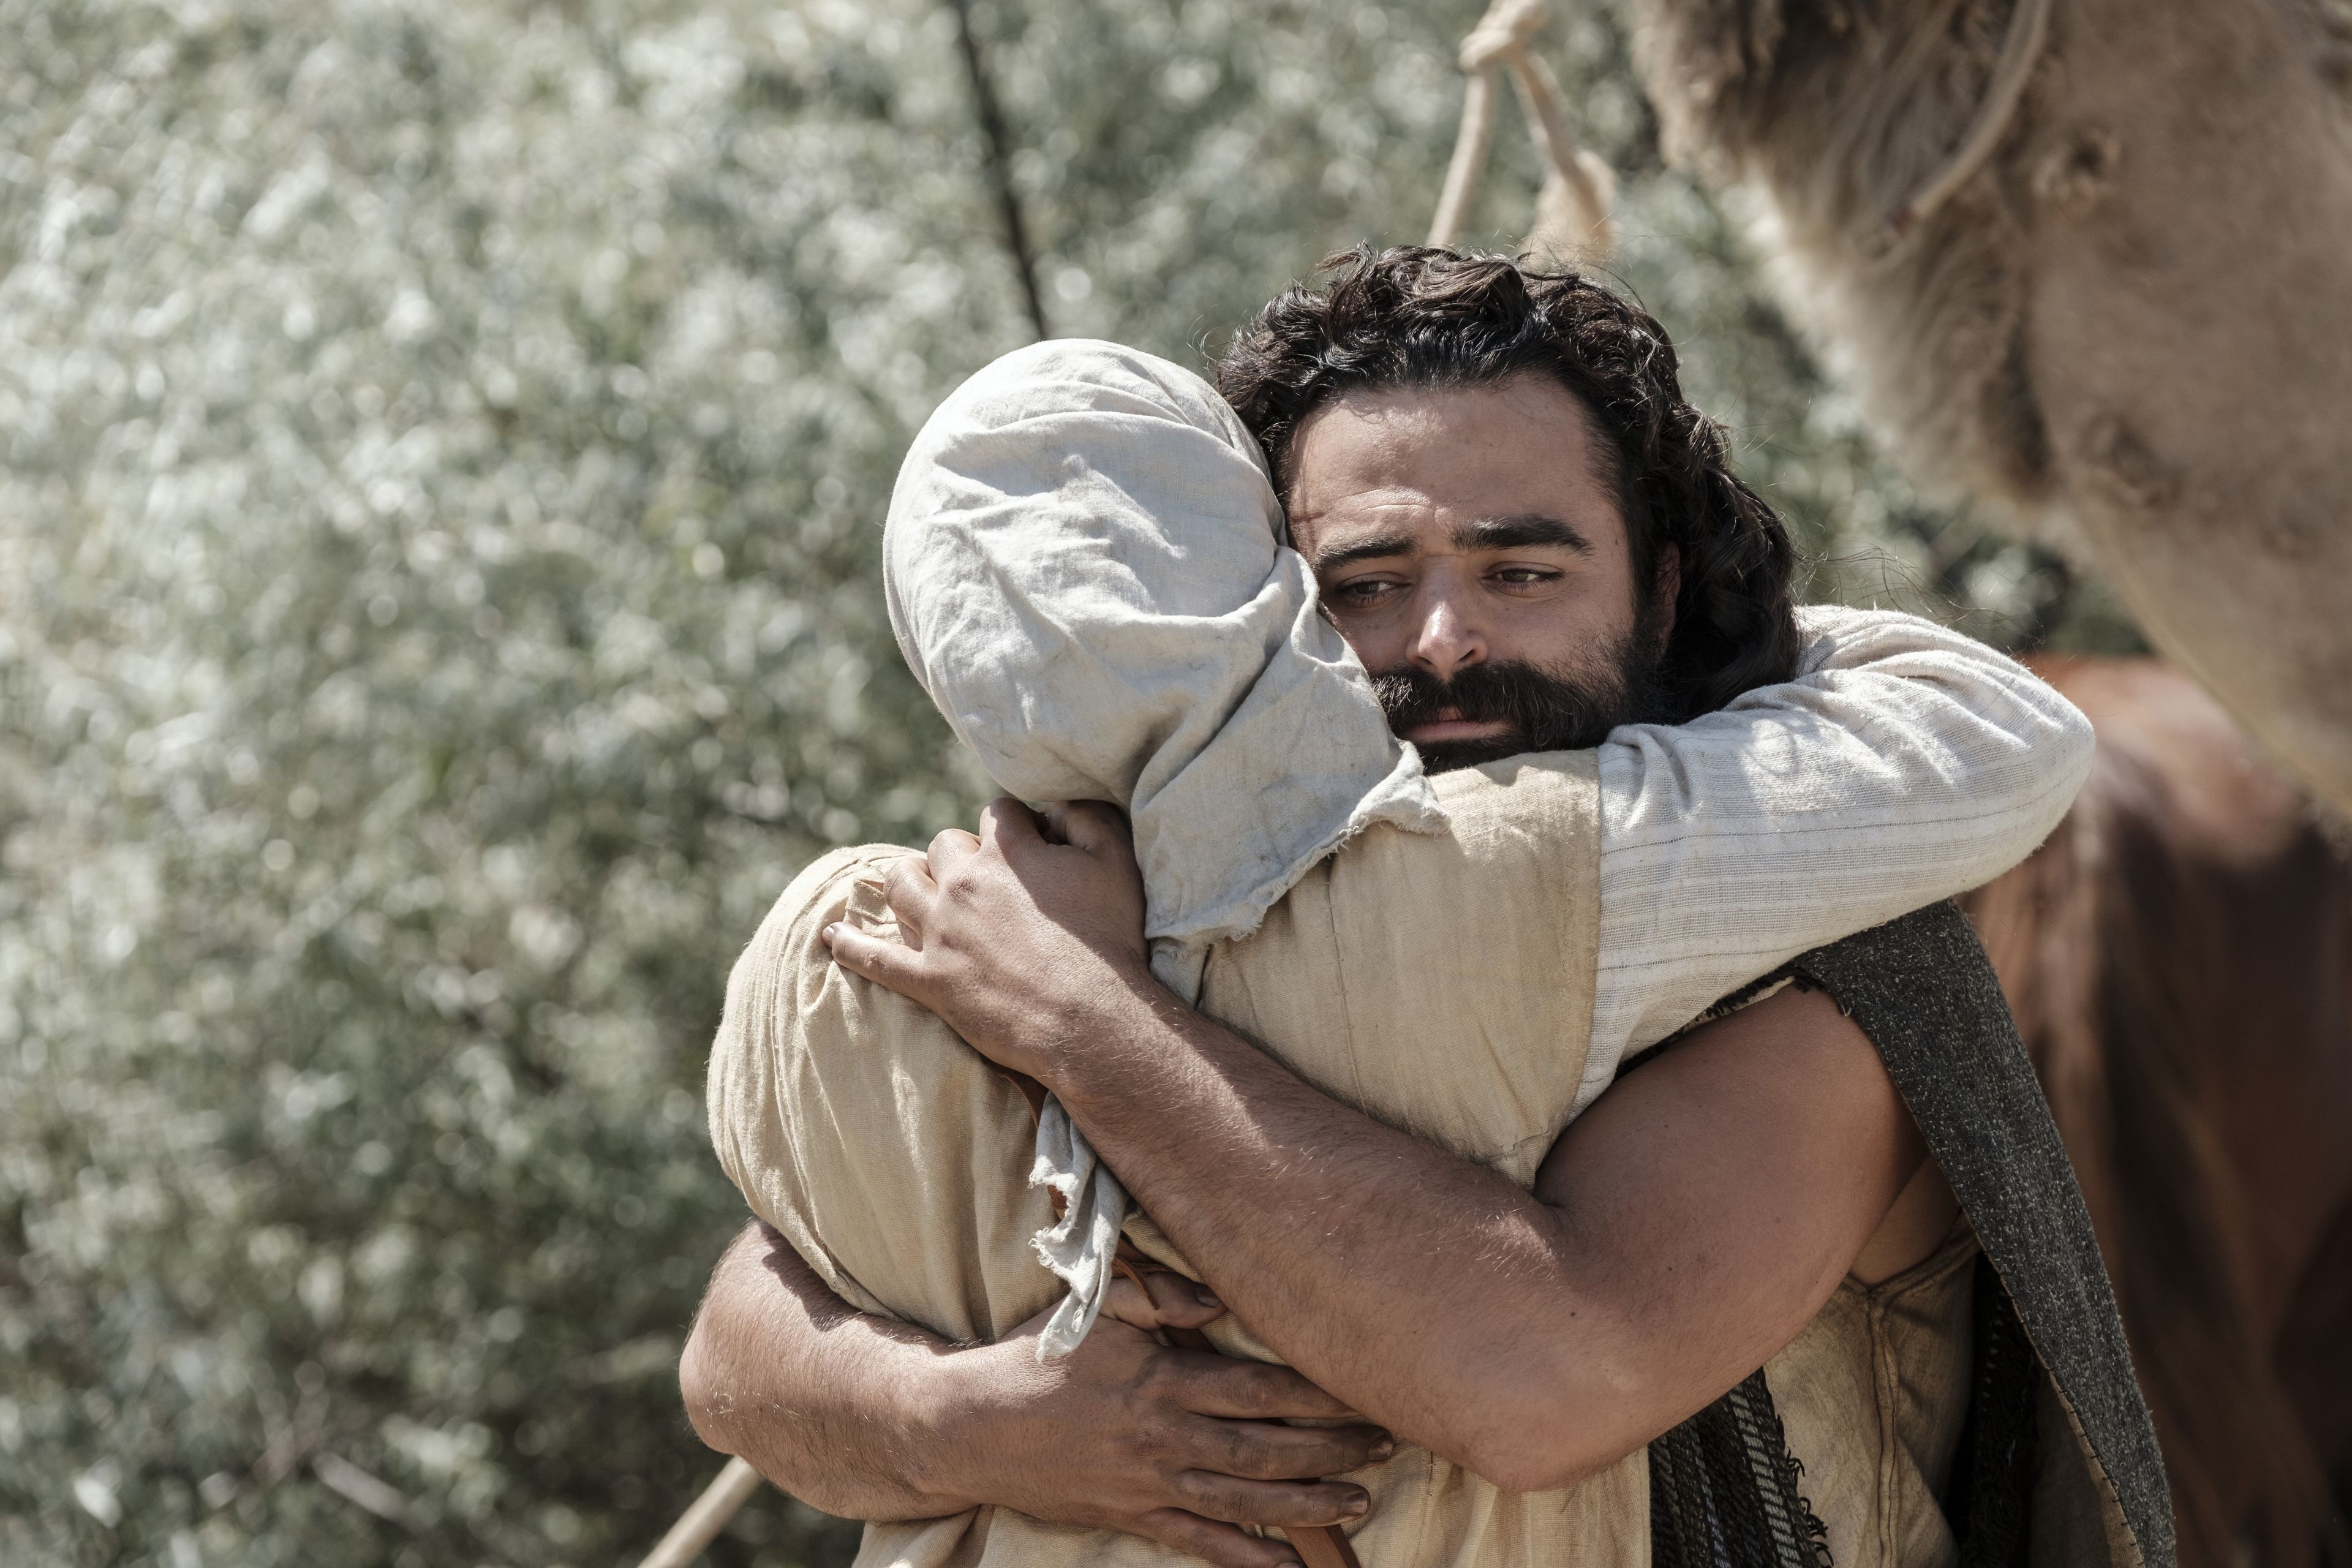 Sariah hugs Laman upon his return to the camp.